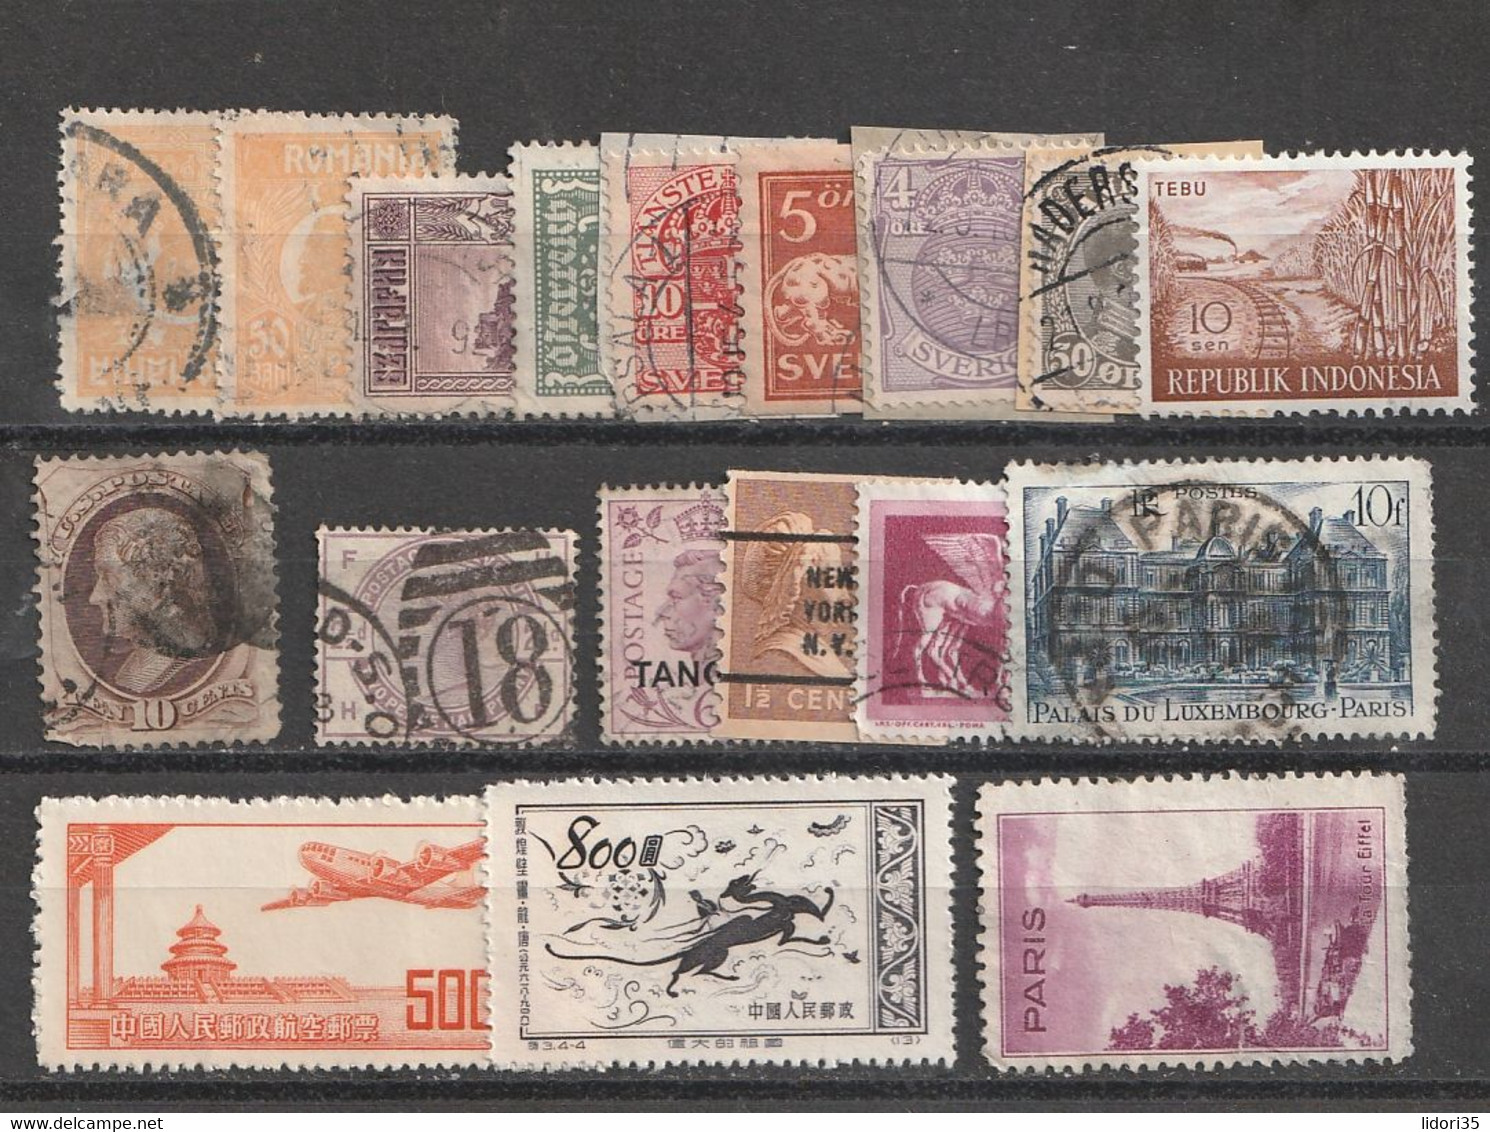 Weltweit - Int. Aelterer Bestand (event. Fundgrube) (2252) - Lots & Kiloware (mixtures) - Max. 999 Stamps